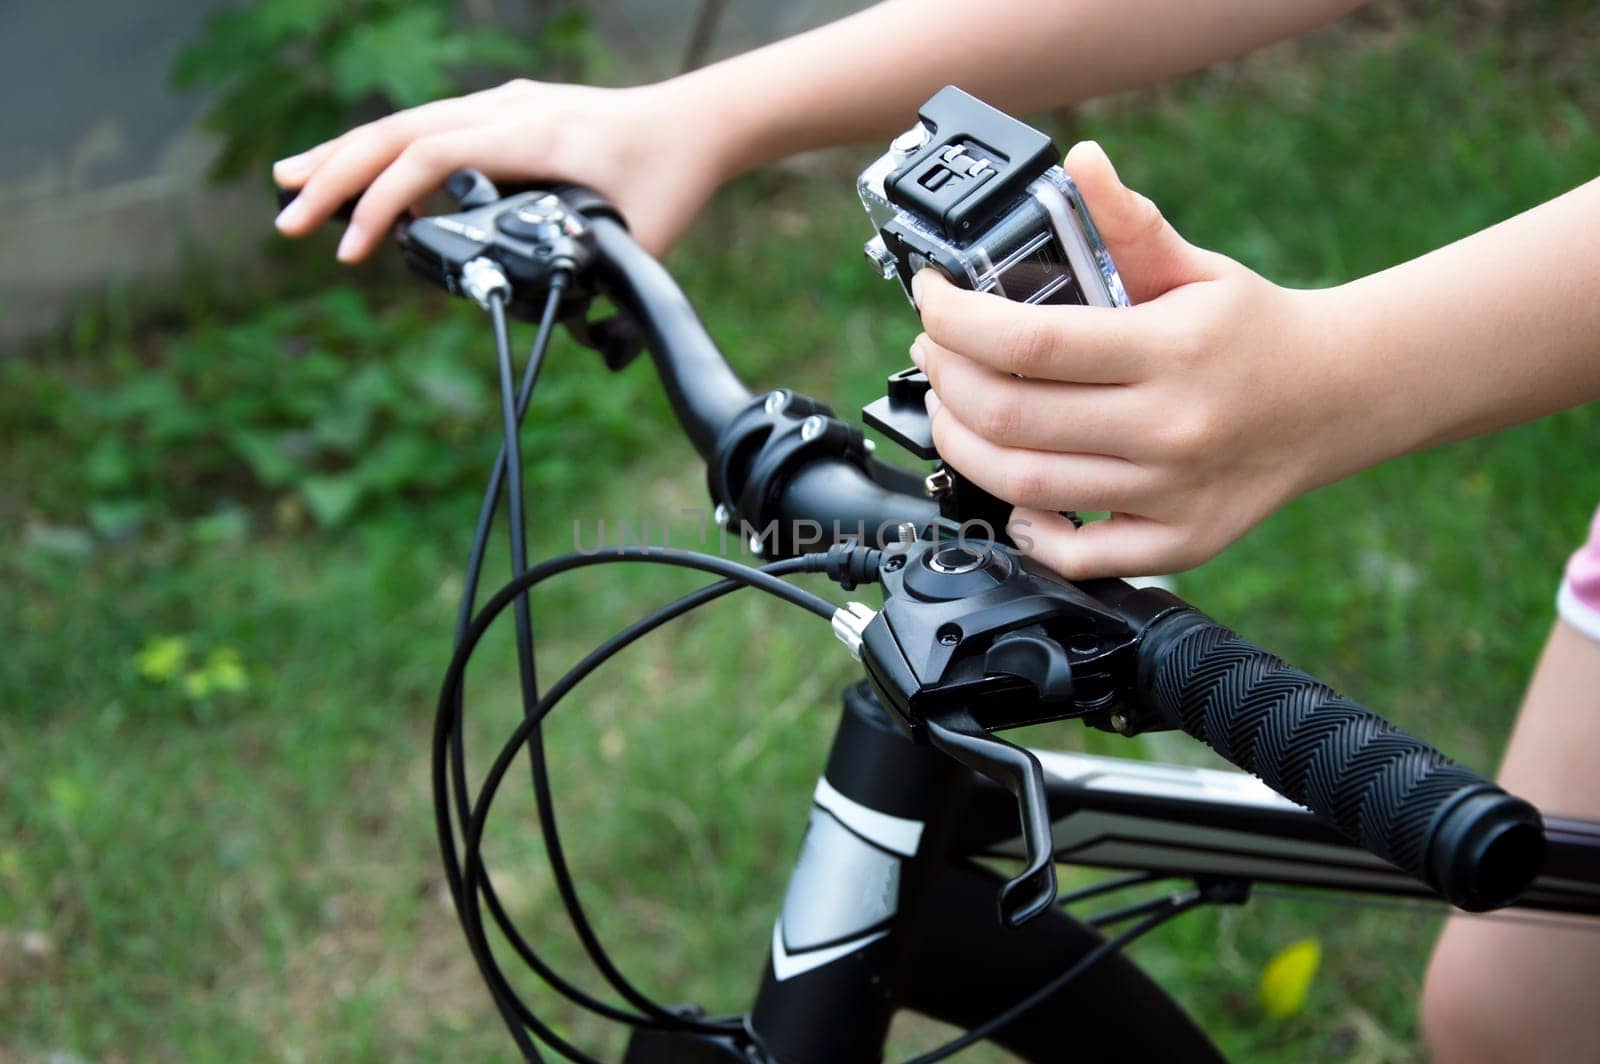 A woman's hand adjusts a digital camera mounted on the handlebars of a mountain bike.